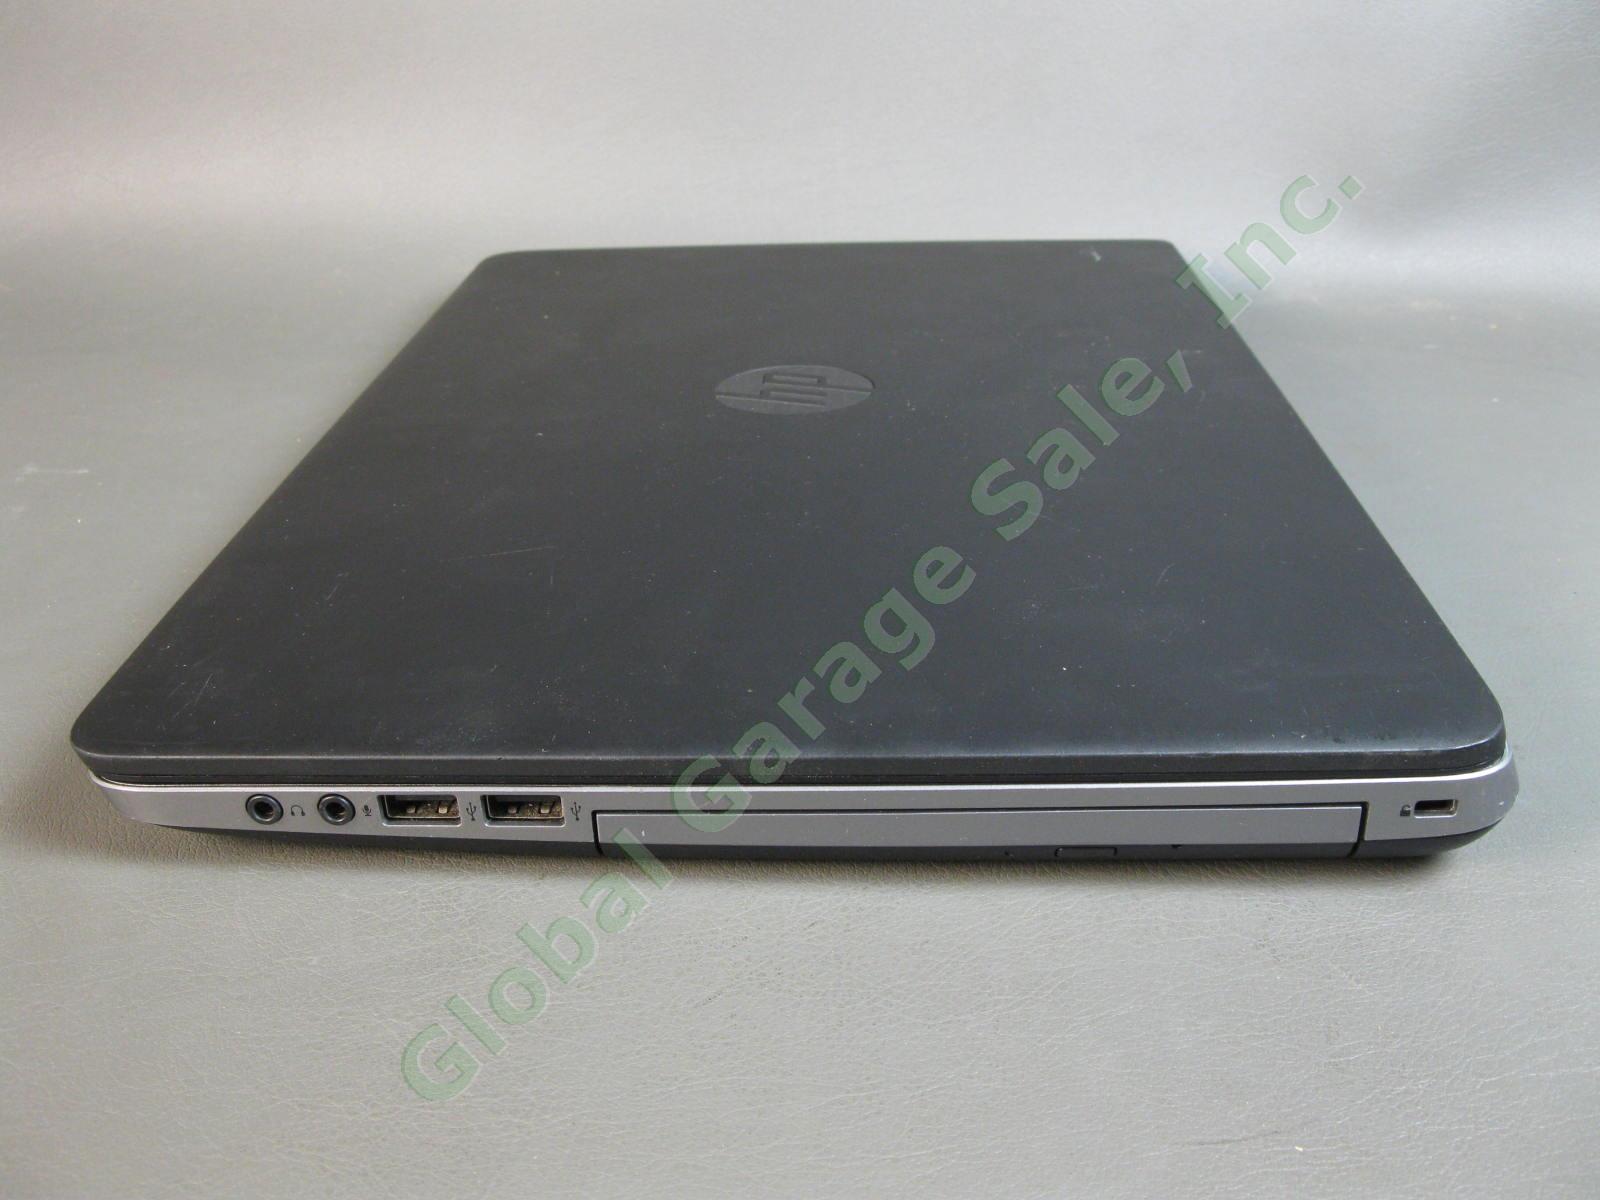 HP ProBook 450 G1 Laptop Computer i5-4200M 4GB 320GB Win10 WIFI DVD Webcam Power 6